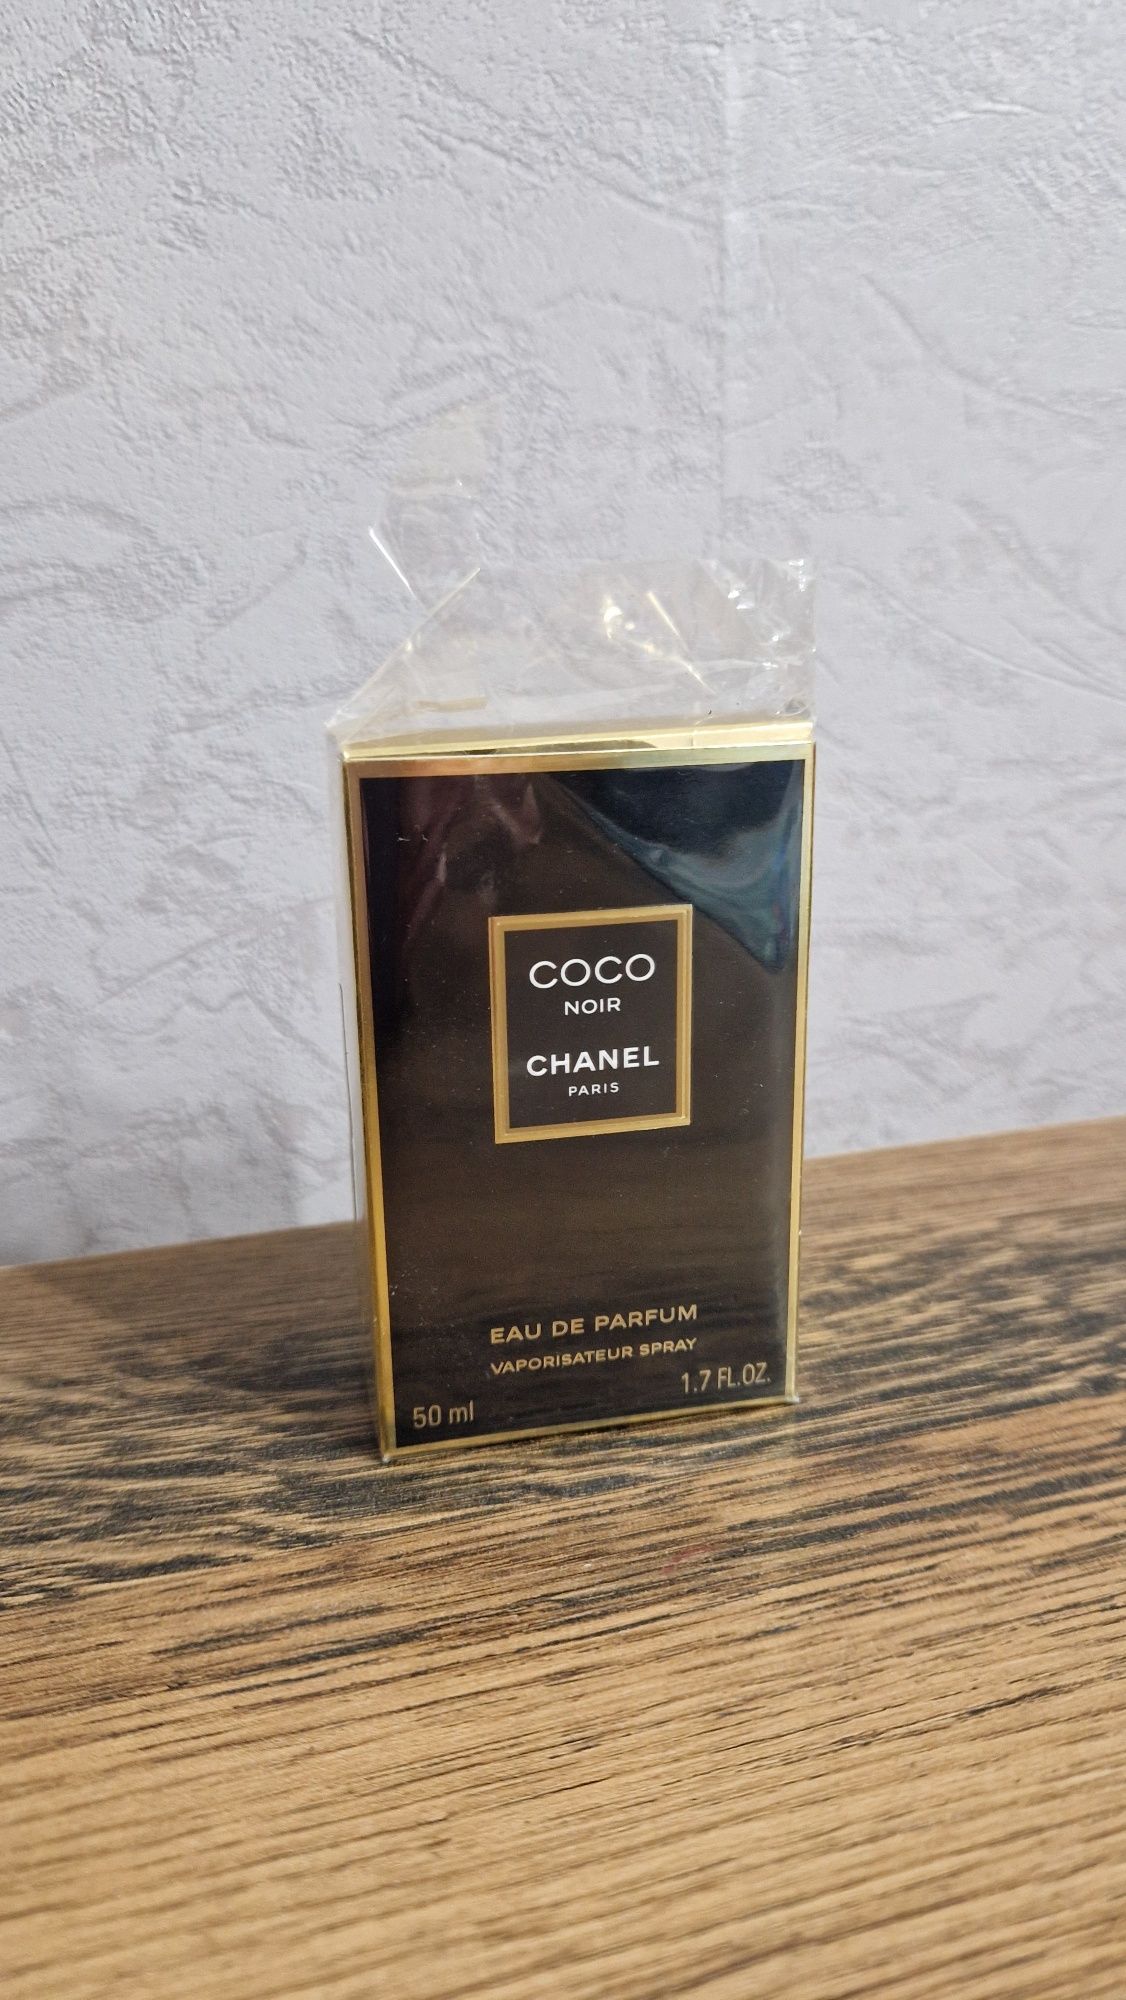 Coco Noir Chanel 50ml